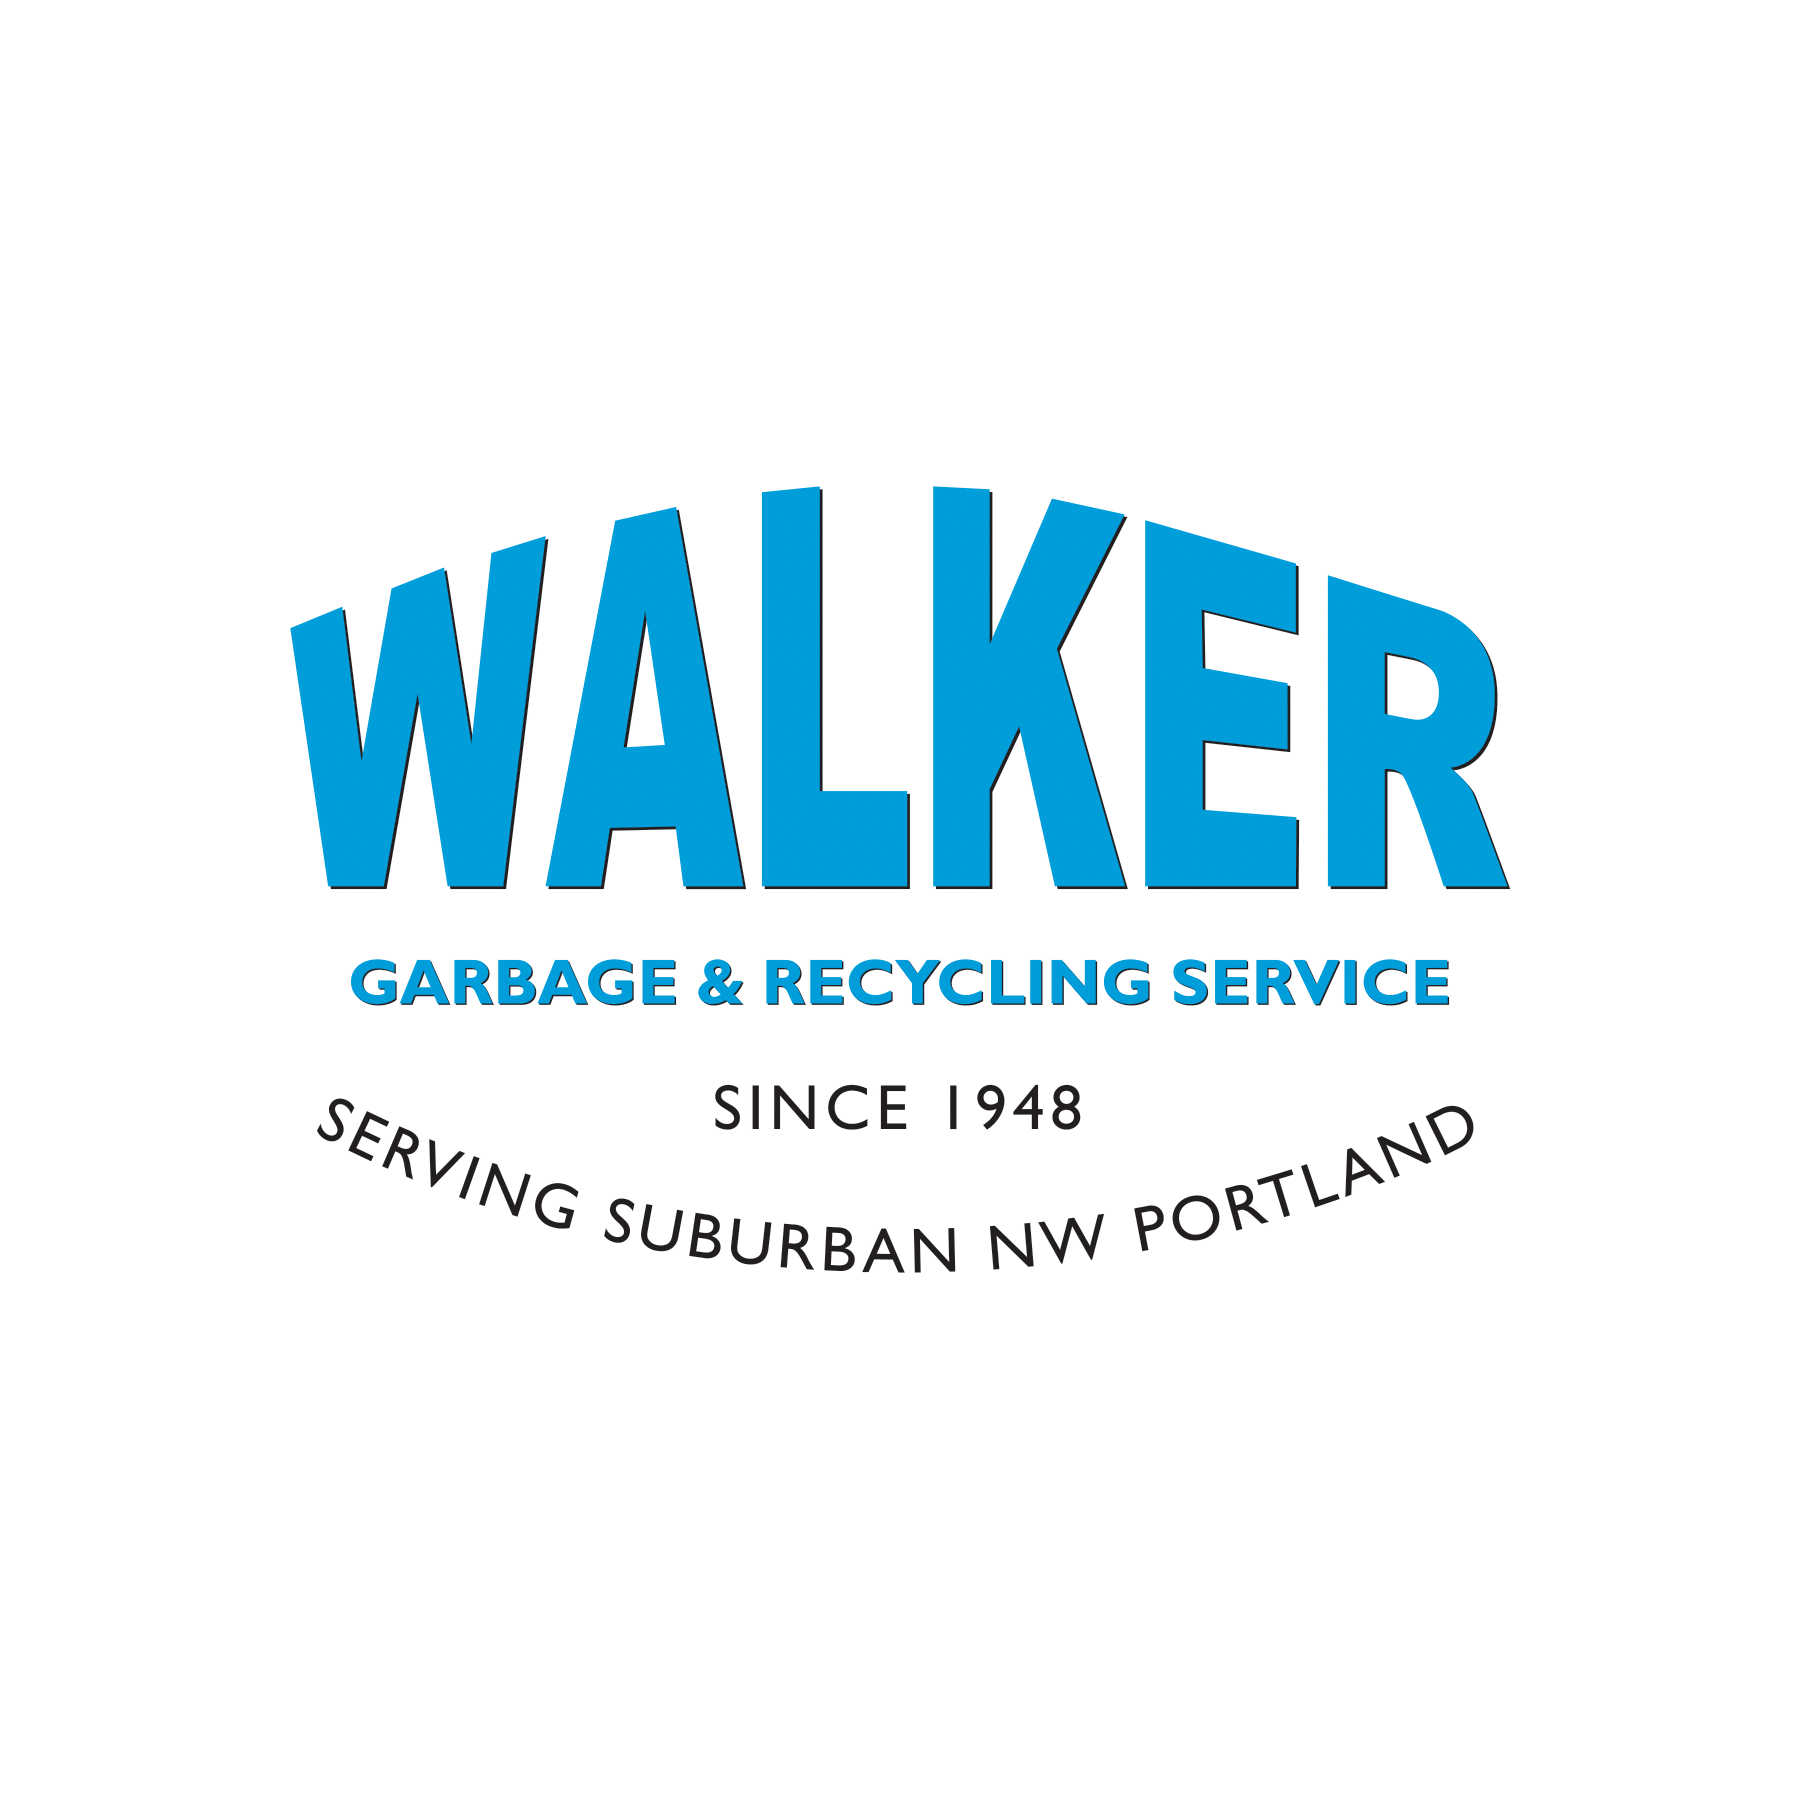 Walker Garbage & Recycling Service